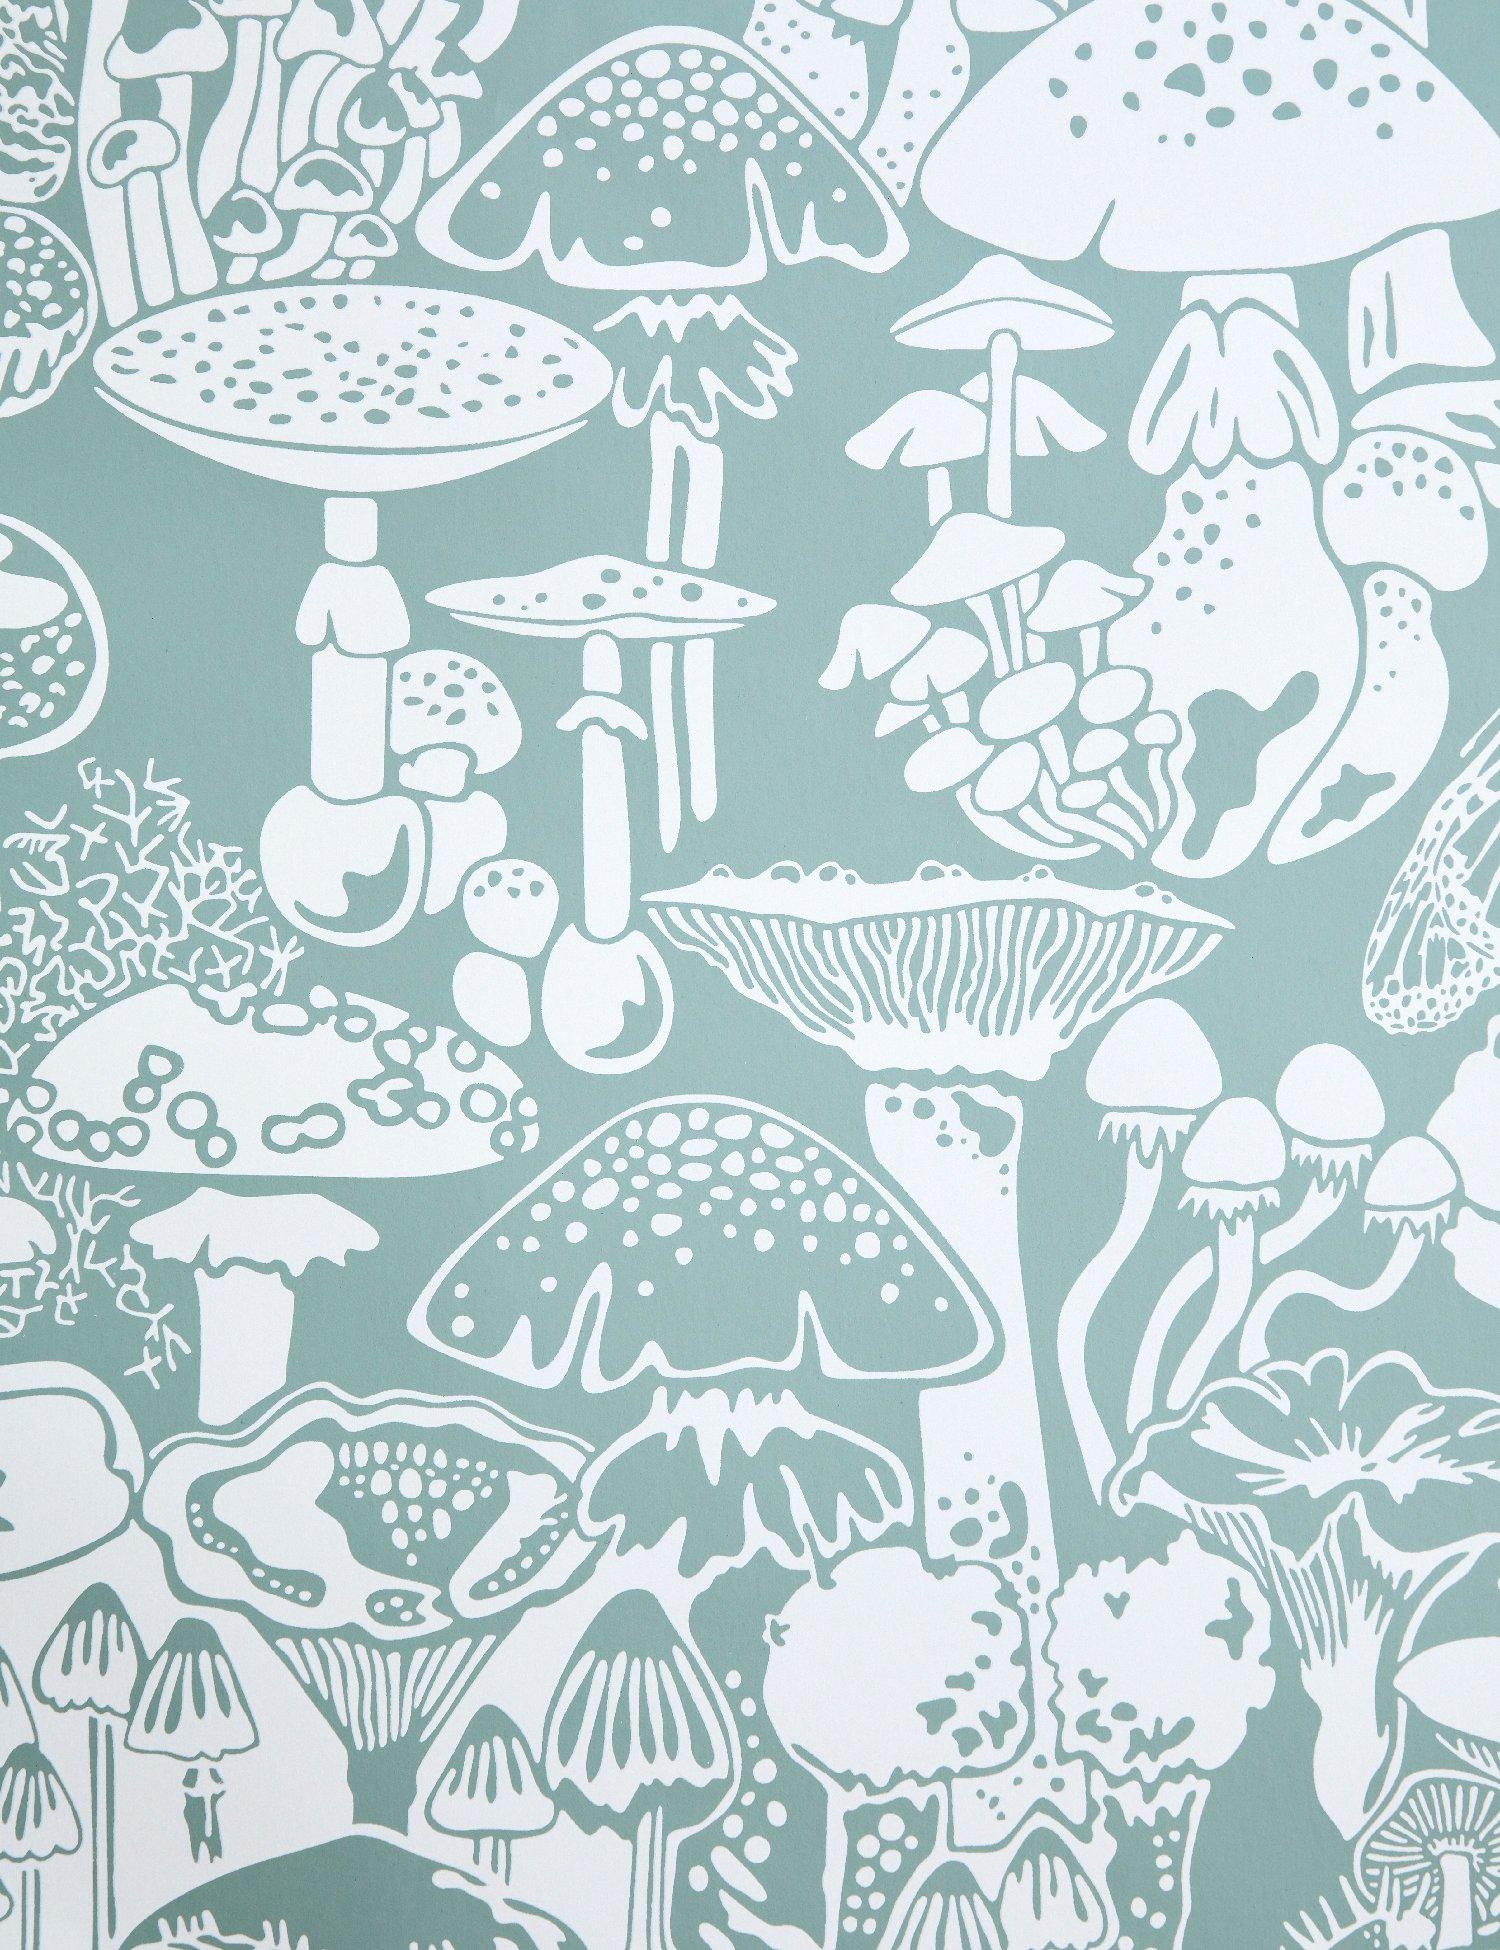 Trippy Mushroom Wallpaper BIGt 12296 Hd Pictures